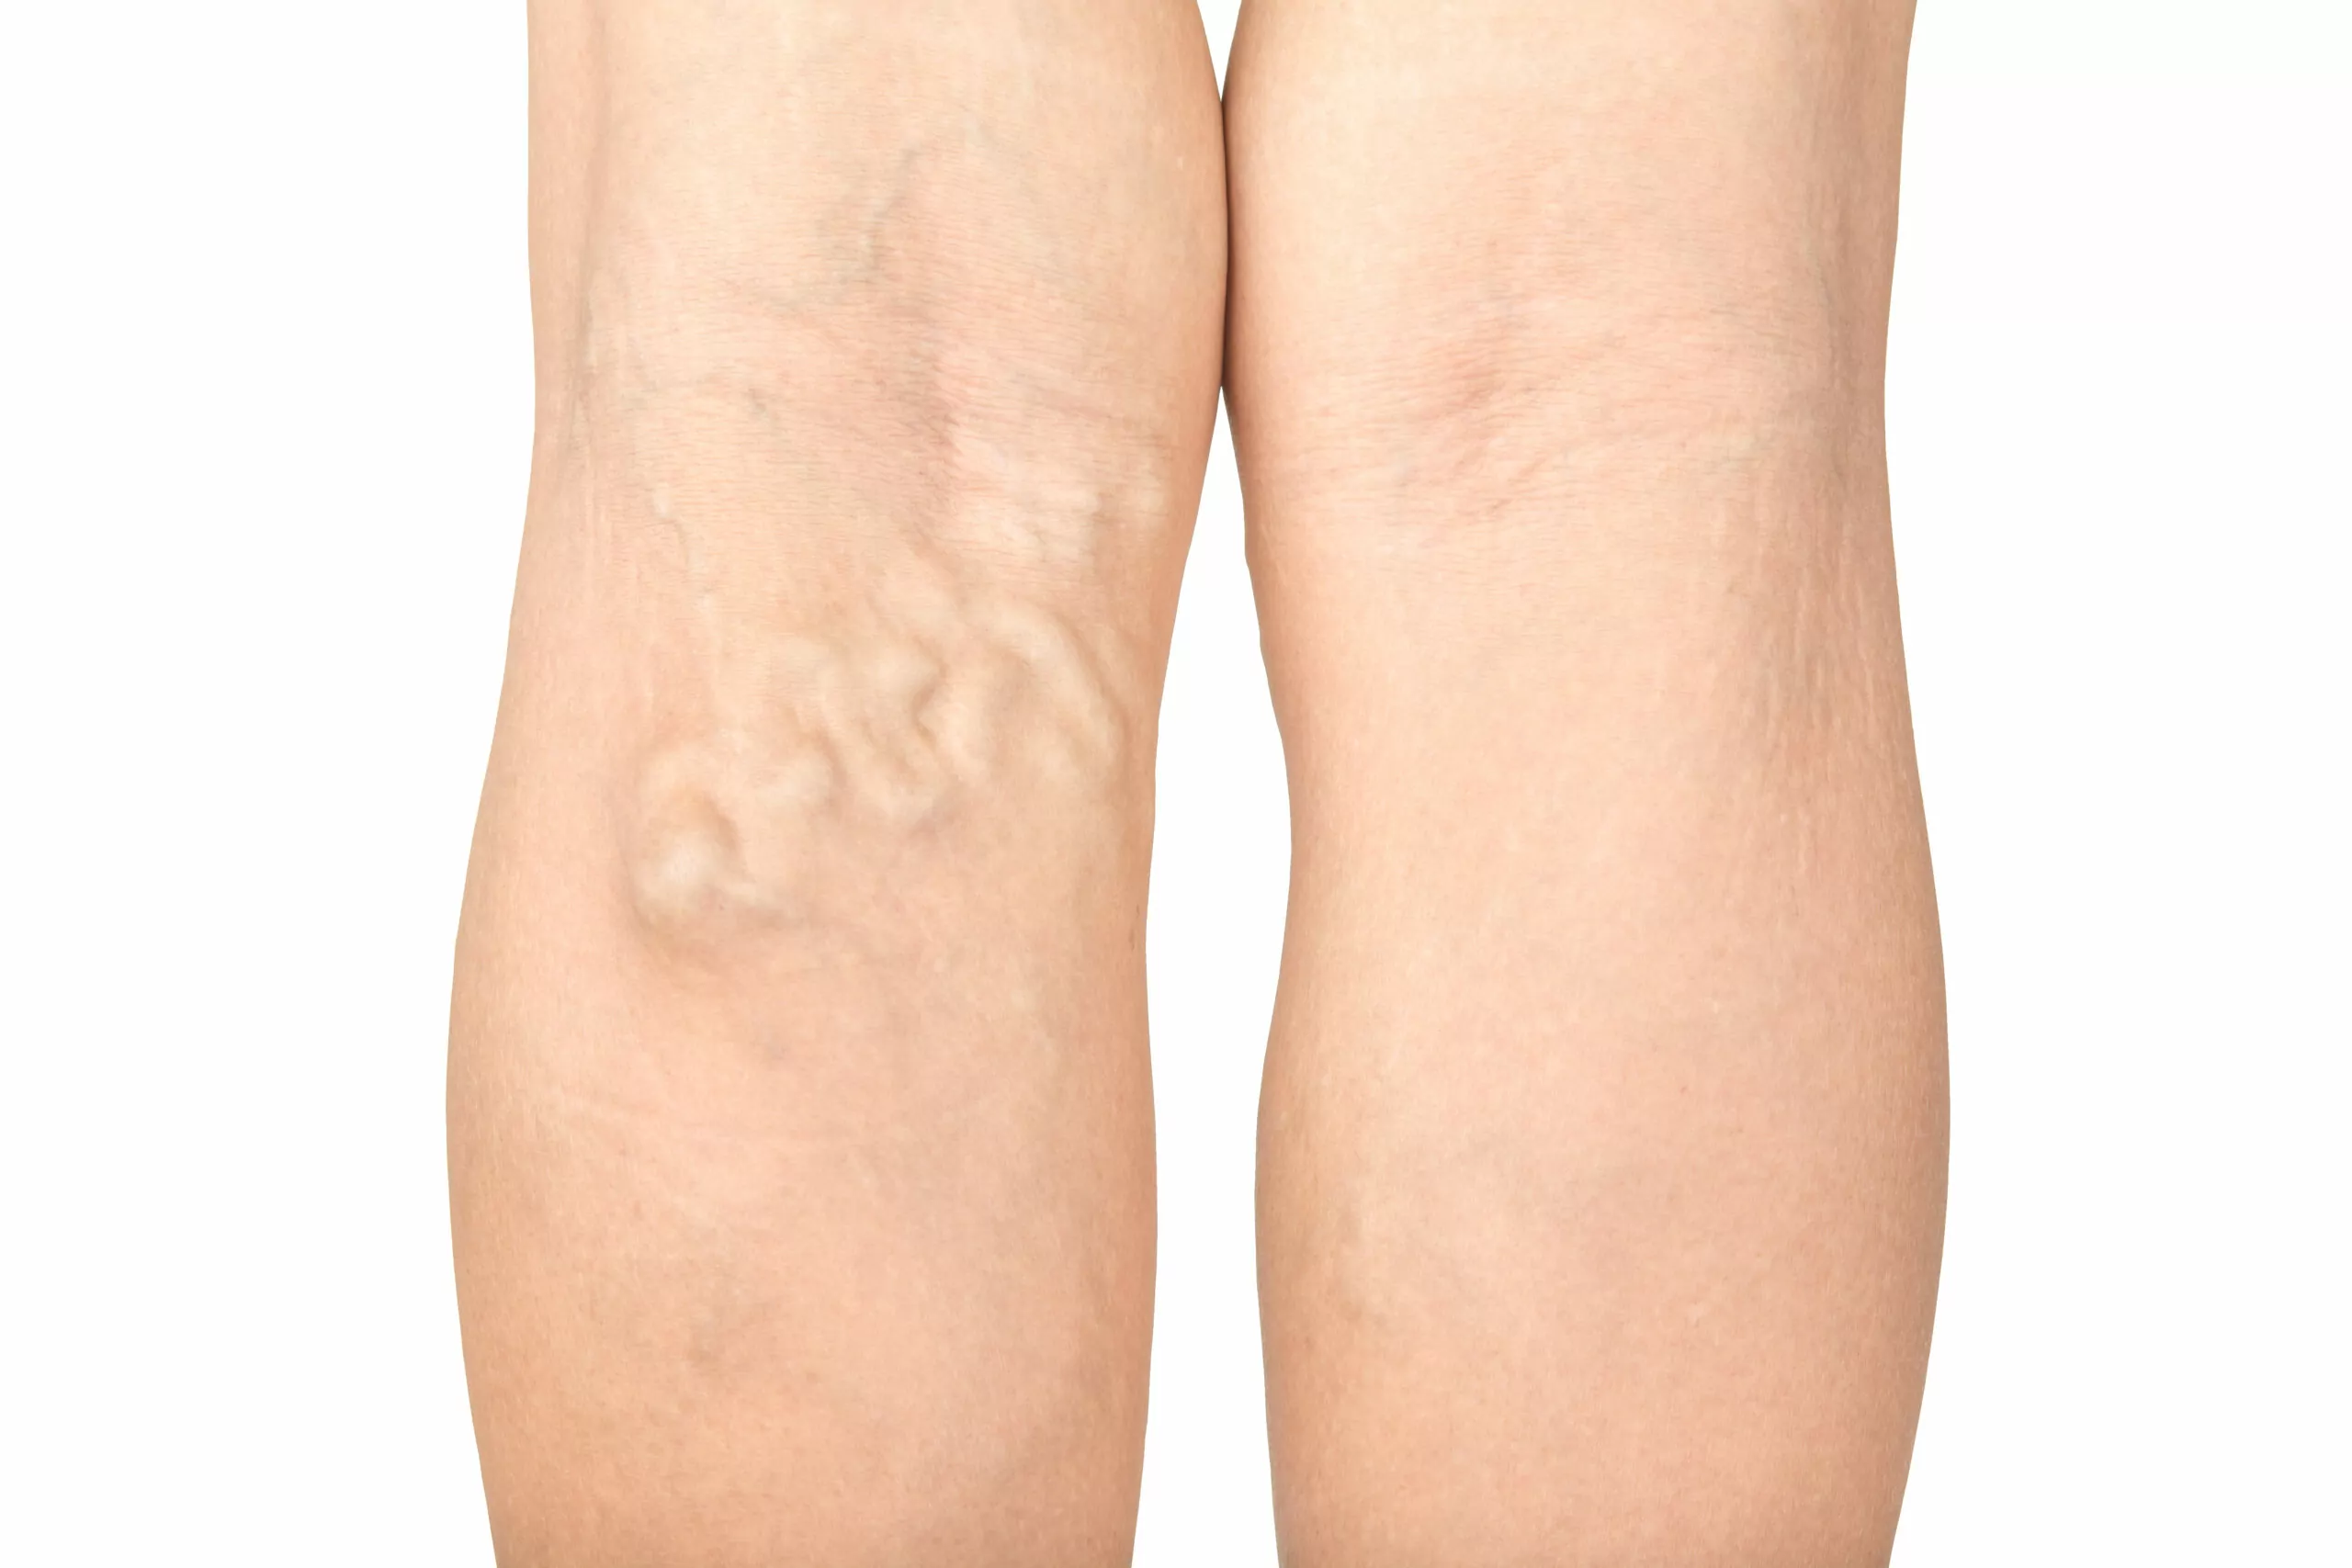 Varicose Veins In The Legs